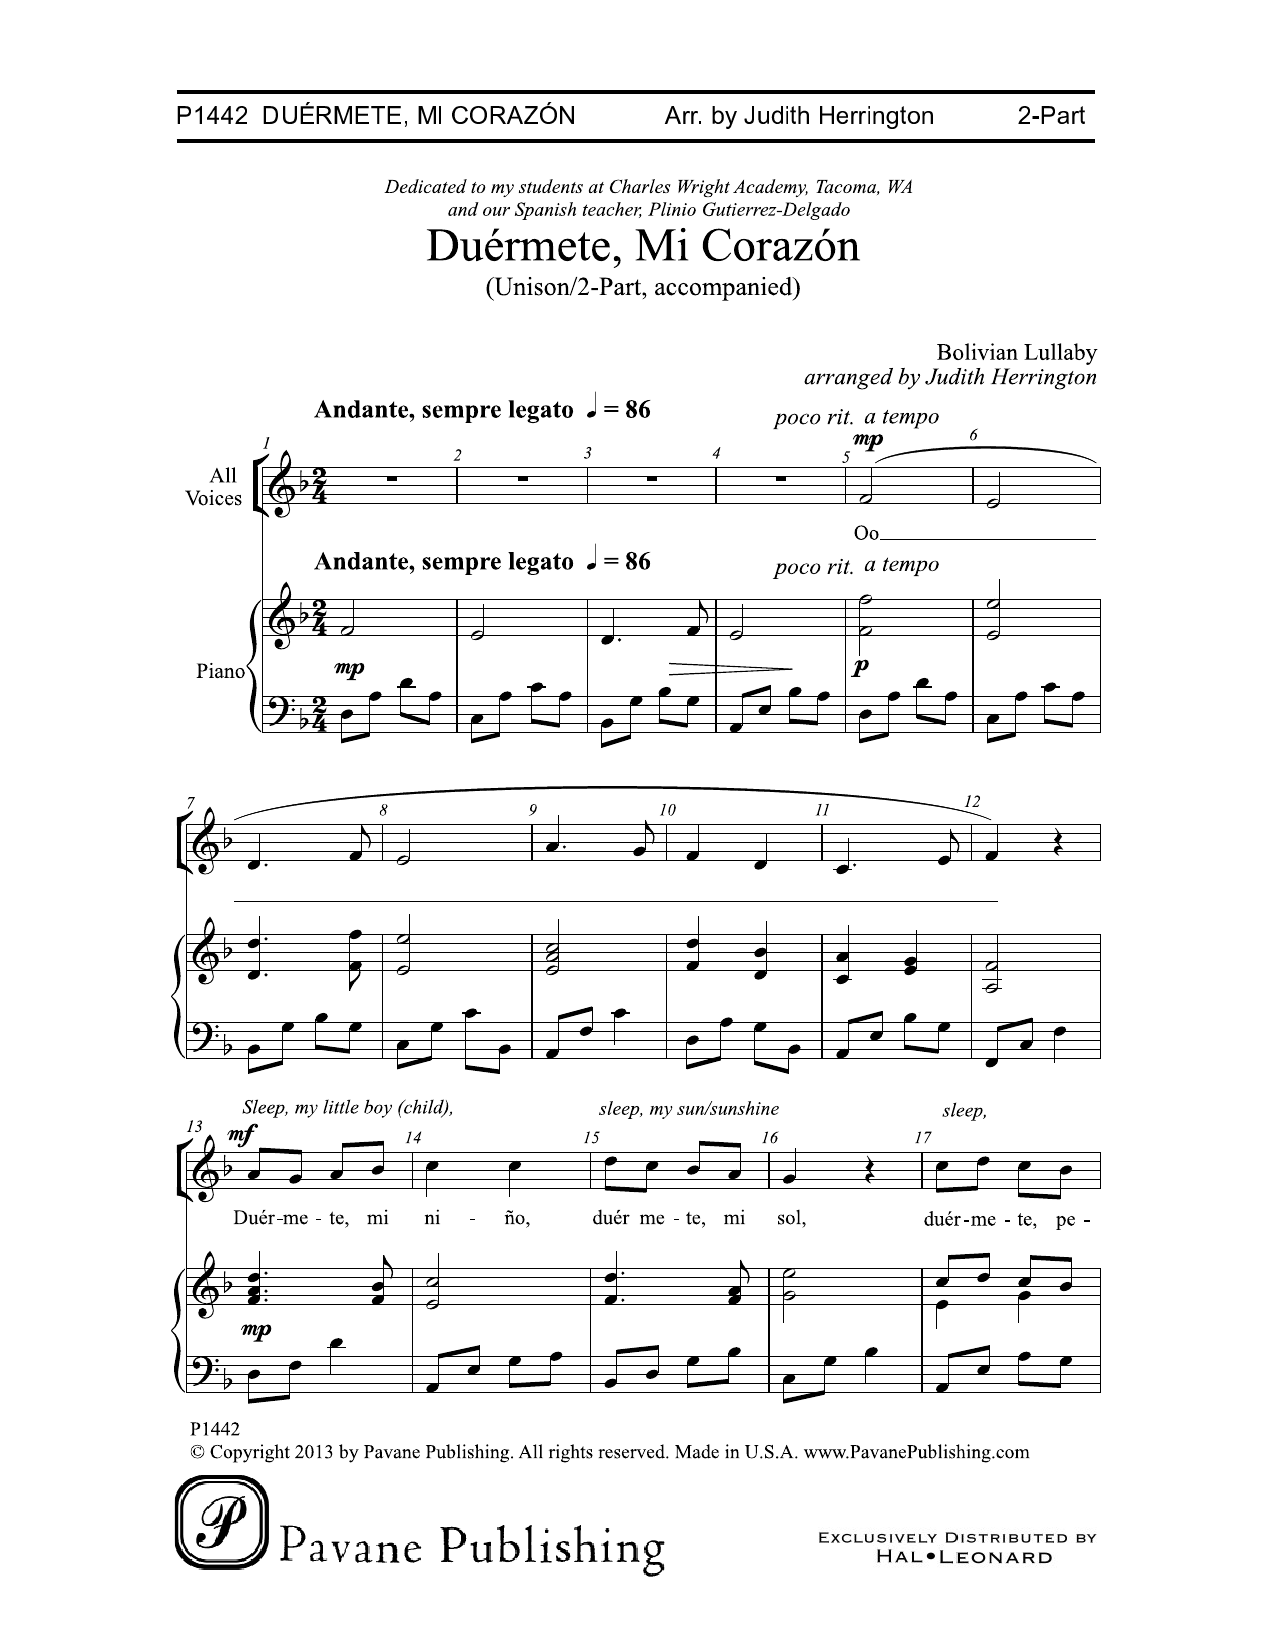 Judith Herrington Duermete, Mi Corazon Sheet Music Notes & Chords for 2-Part Choir - Download or Print PDF